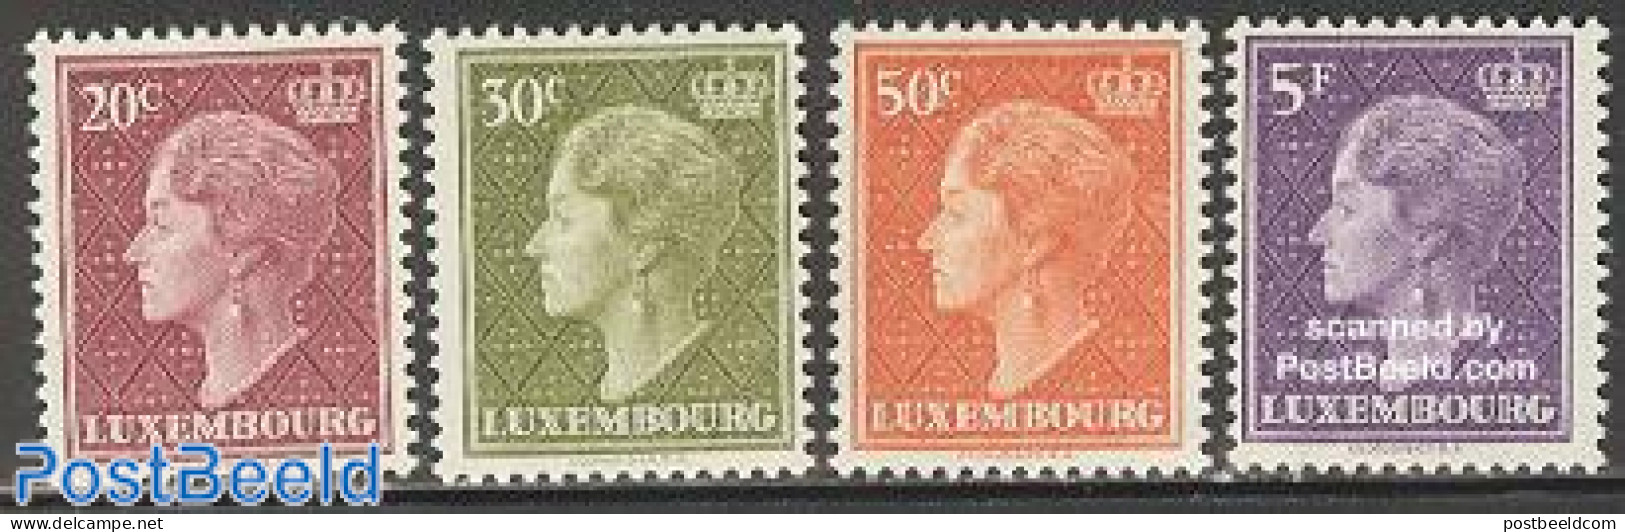 Luxemburg 1958 Definitives 4v, Mint NH - Ongebruikt